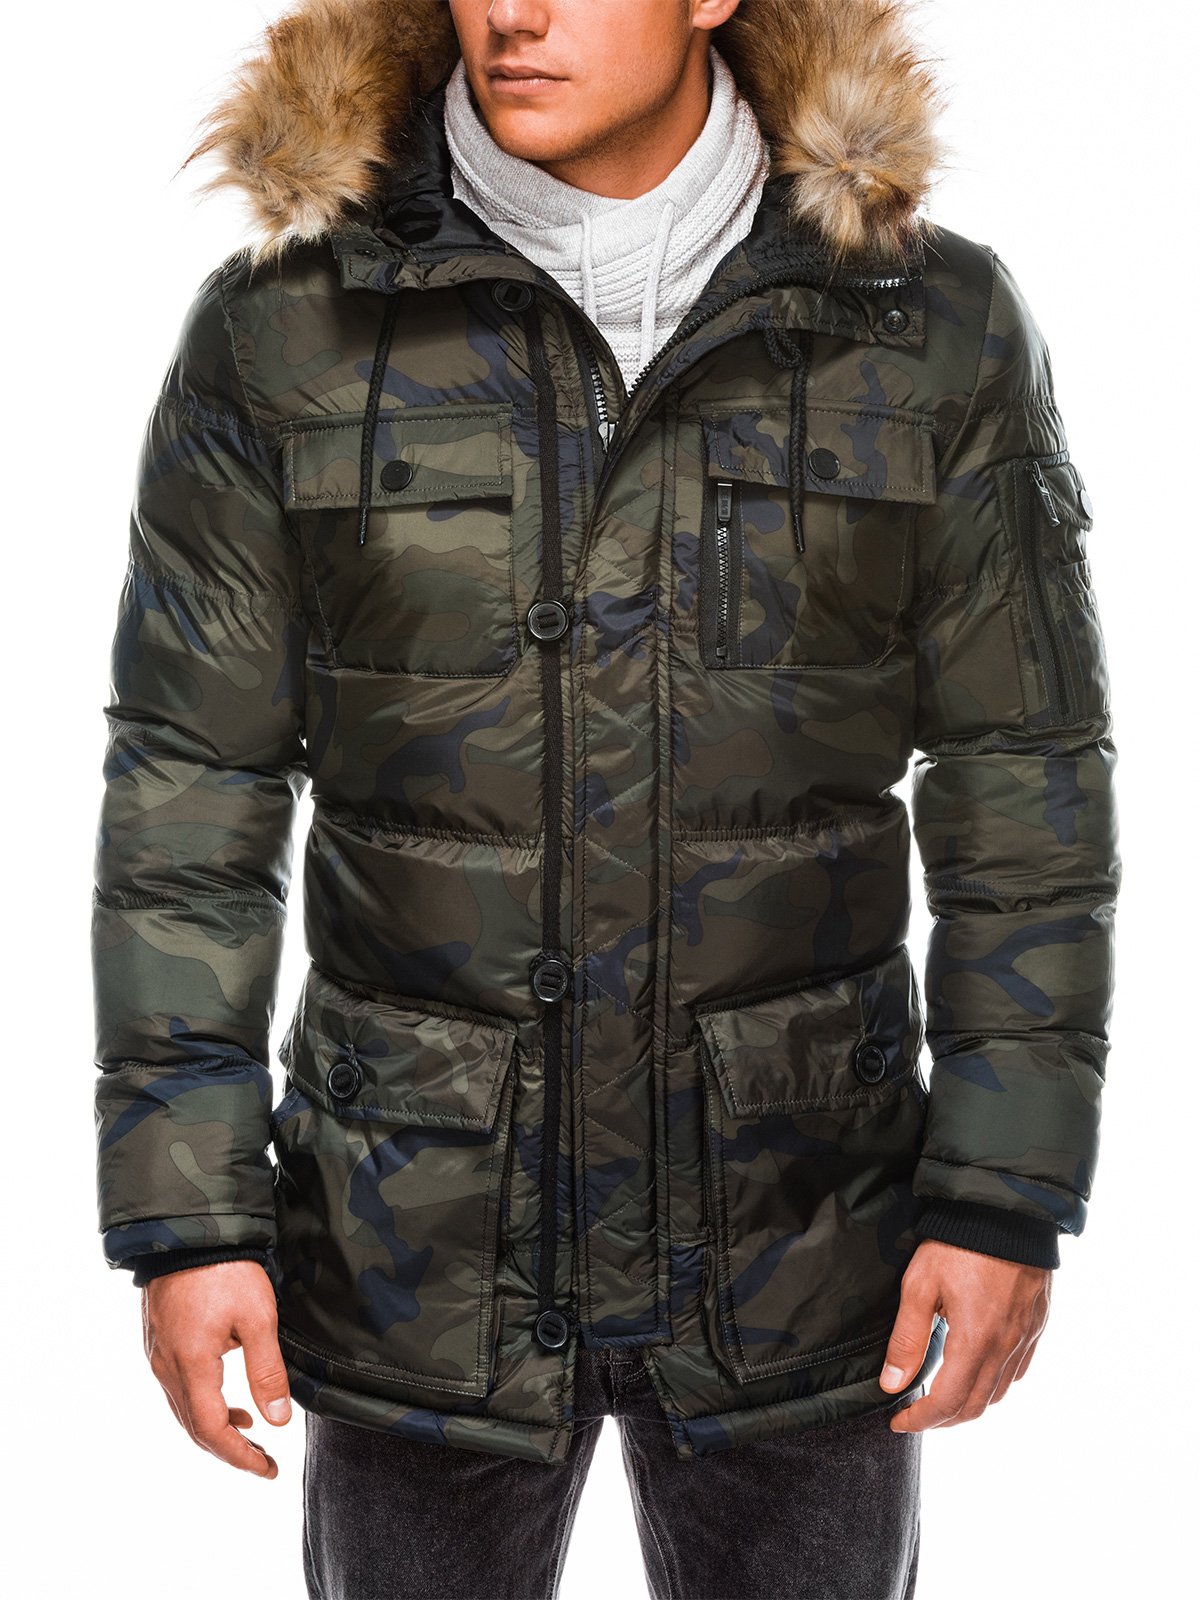 Men's winter parka jacket C355 - green/camo | MODONE wholesale ...